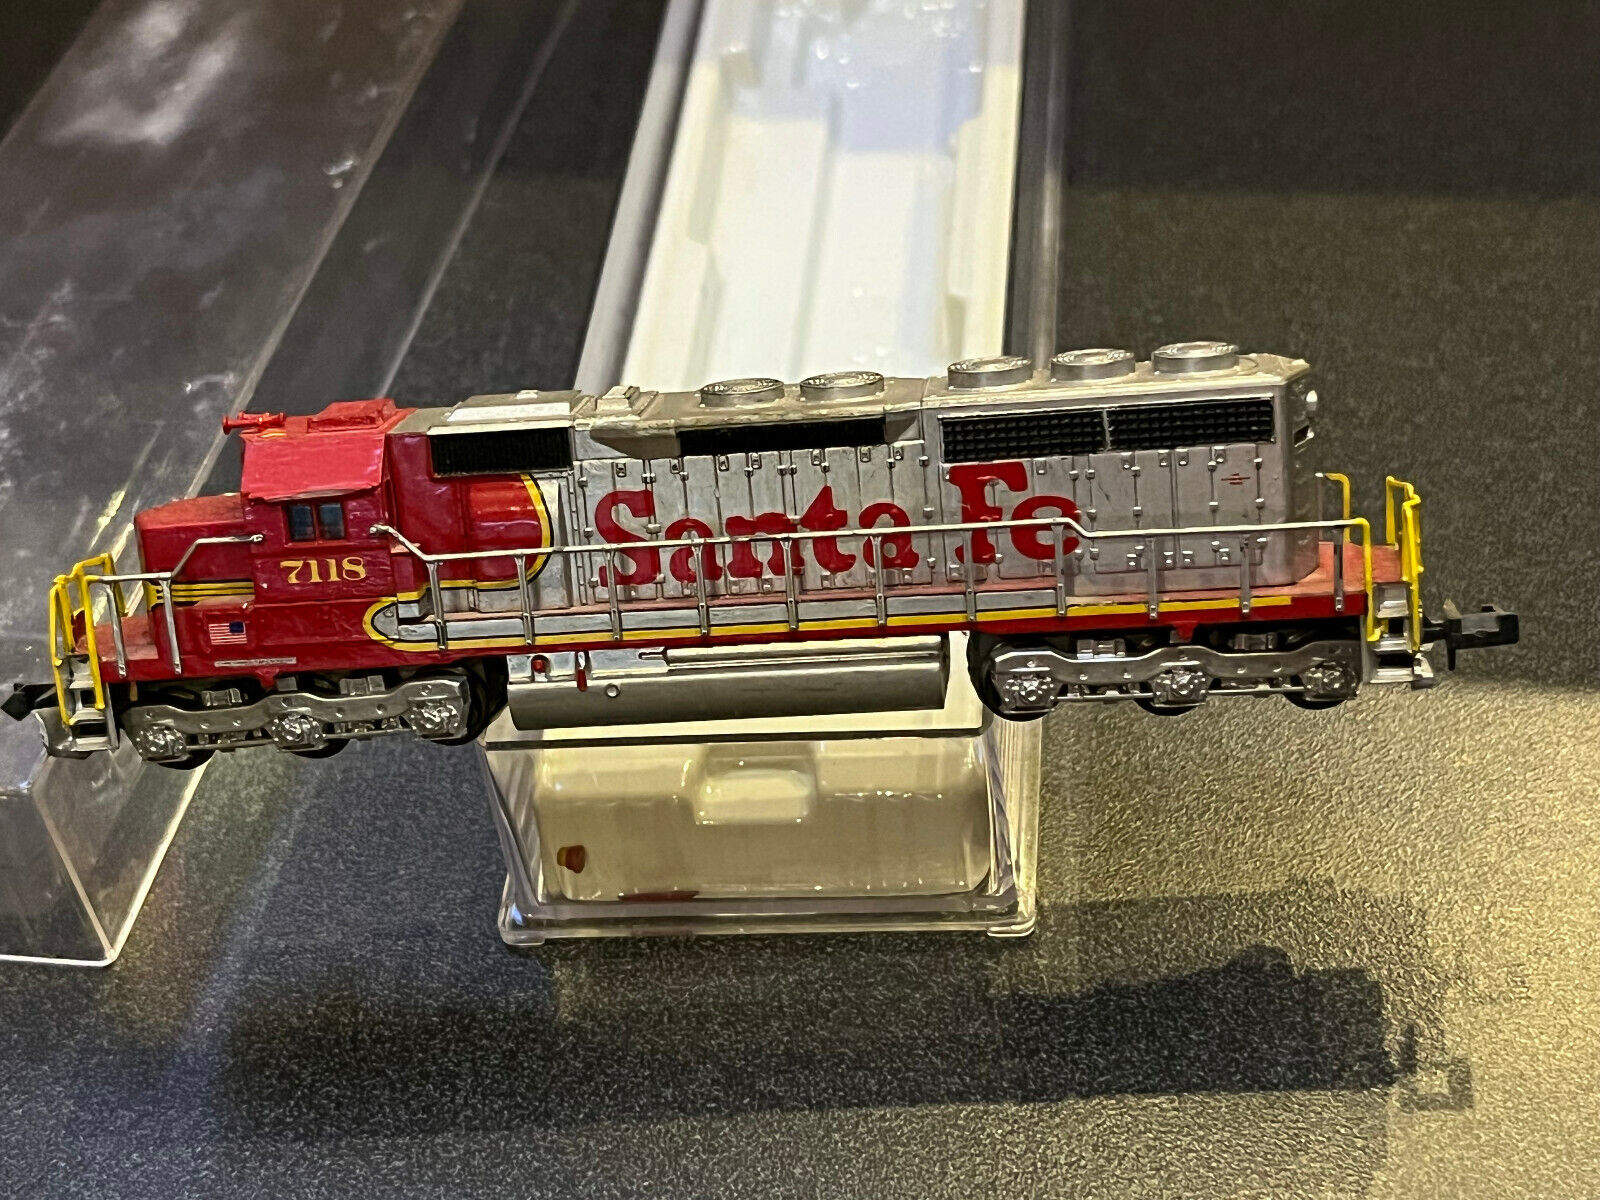 N scale Kato/Japan SD-40 Santa Fe Locomotive #7118 Custom Painted/Detailed ATSF